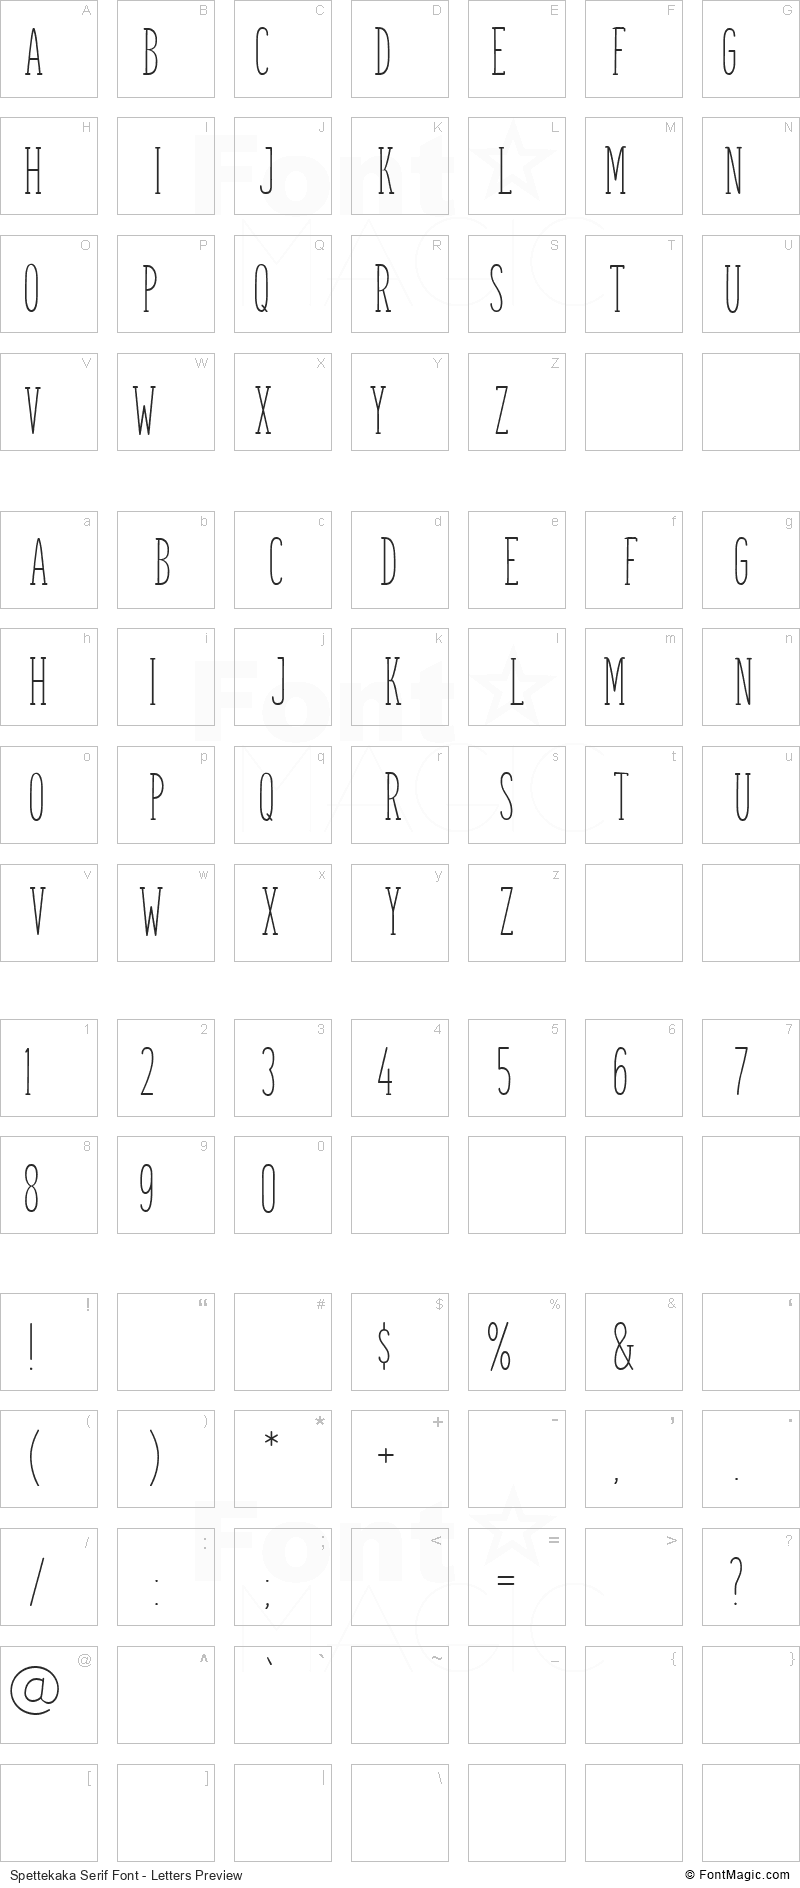 Spettekaka Serif Font - All Latters Preview Chart